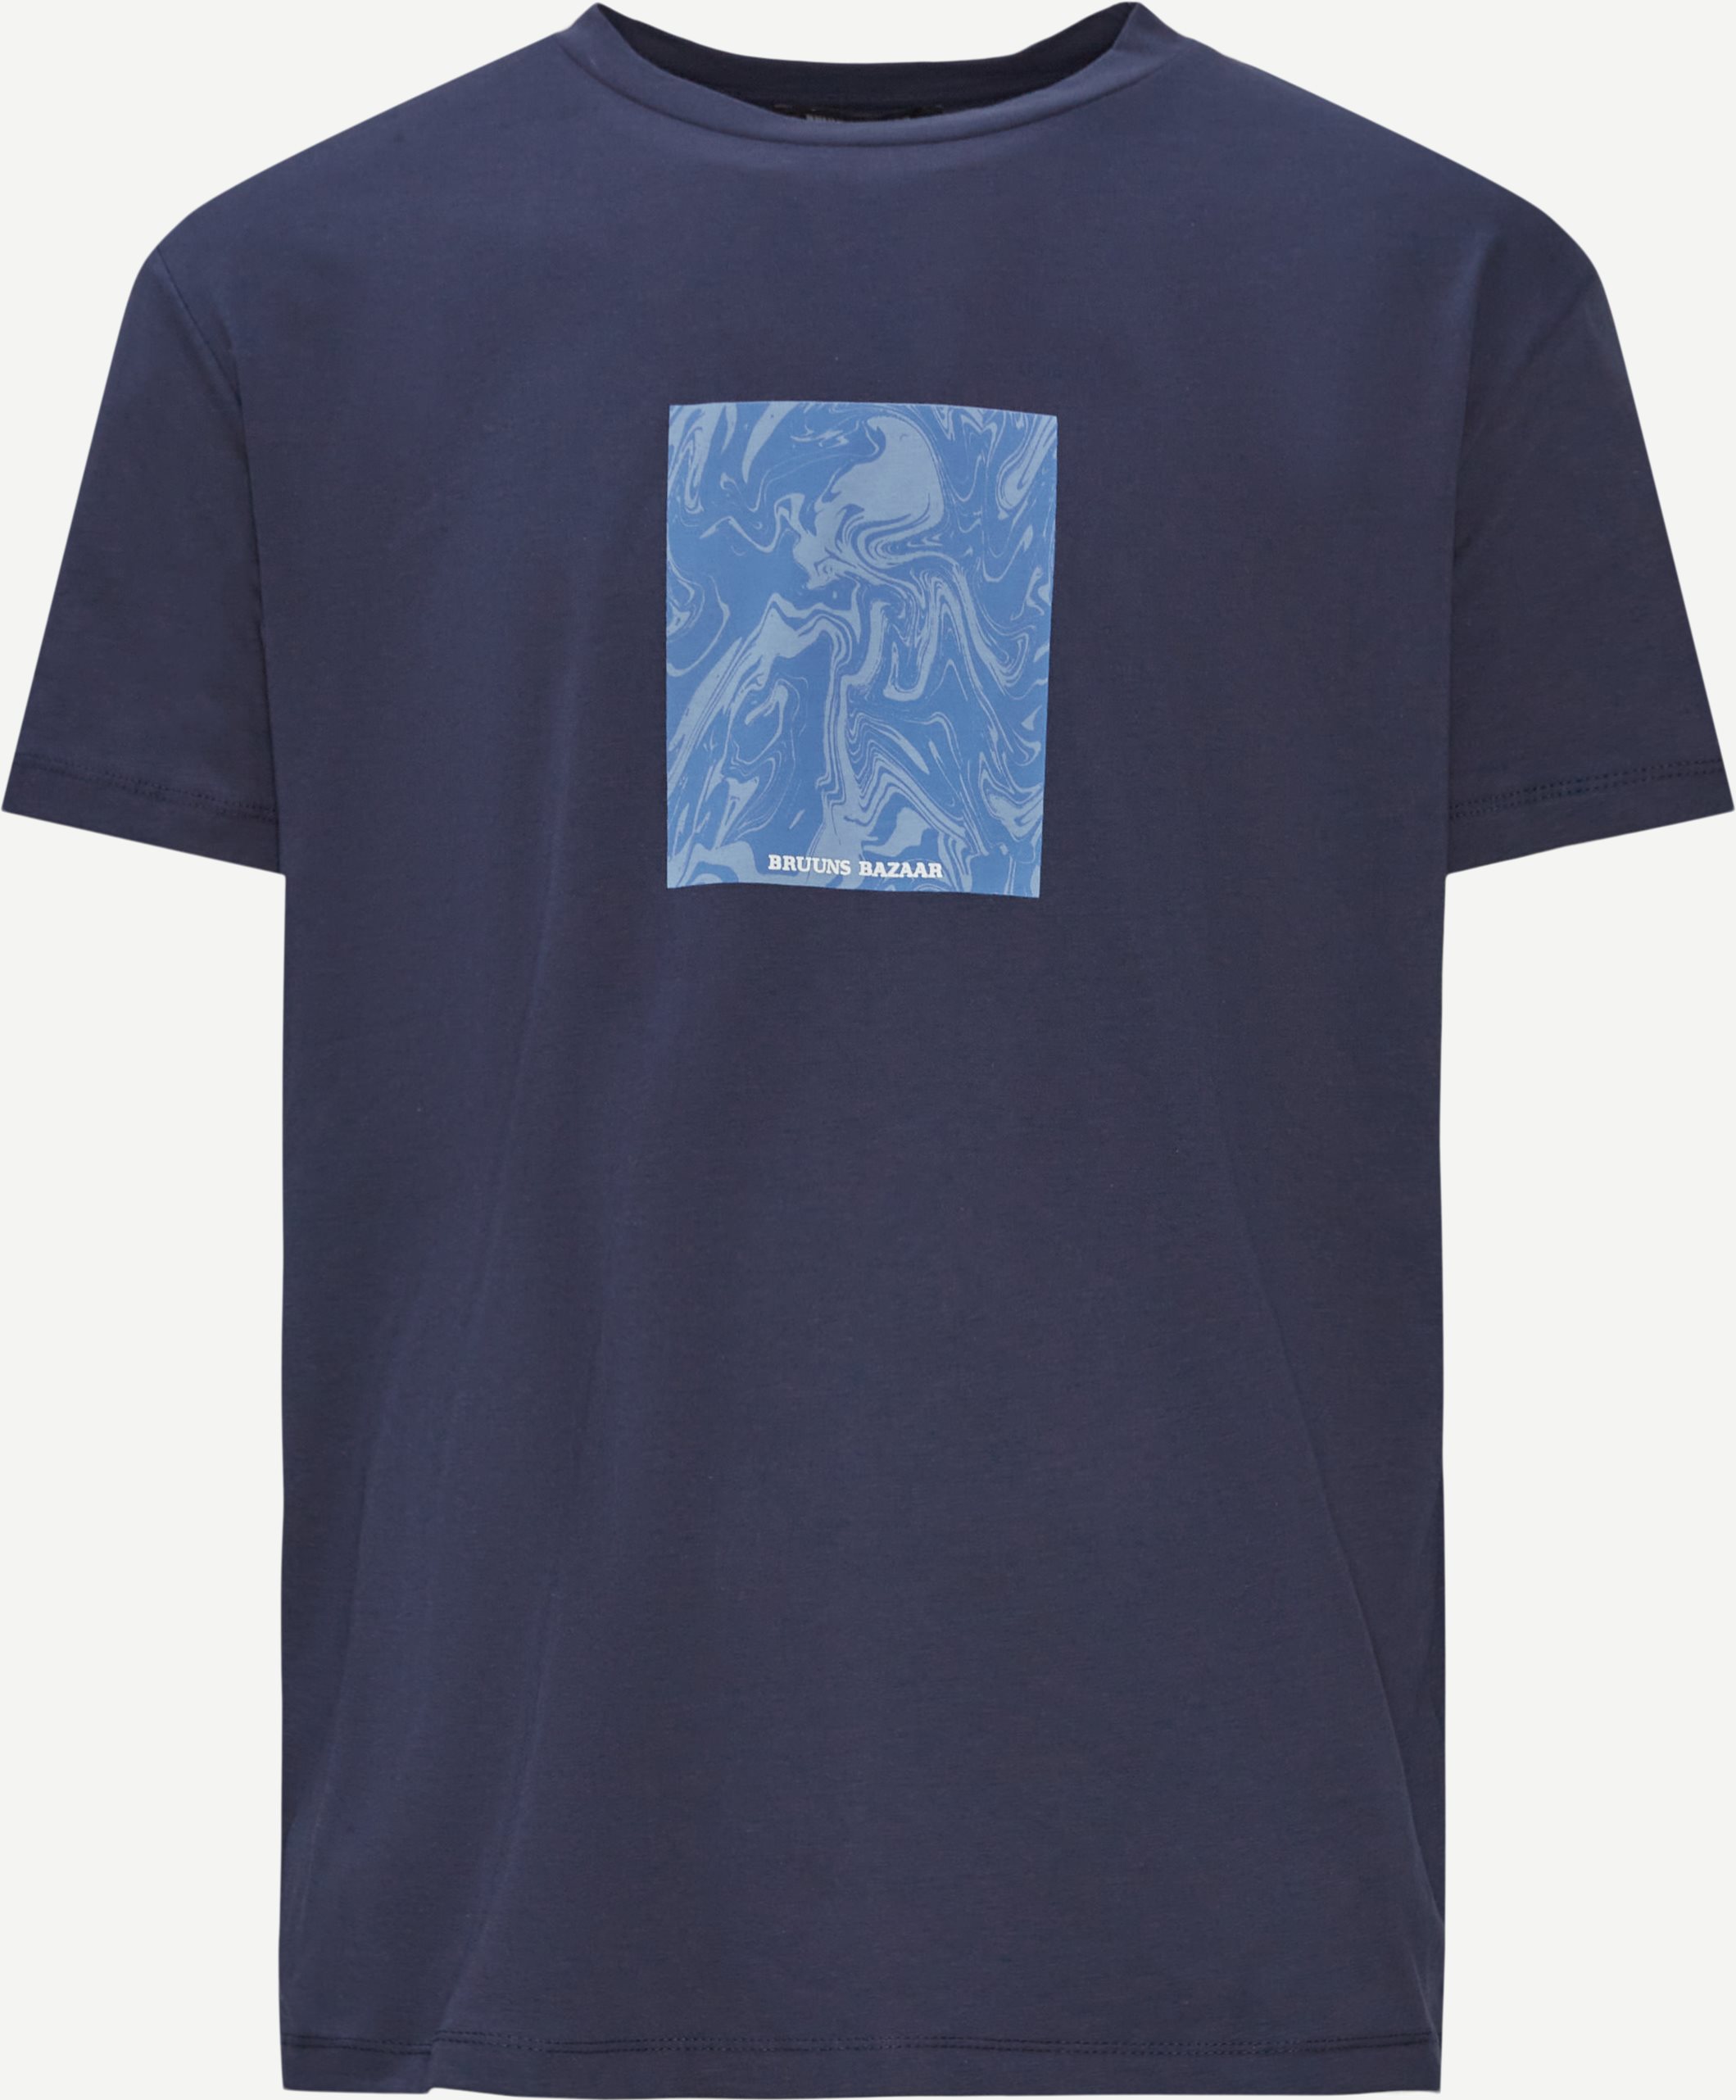 T-shirts - Regular fit - Blue